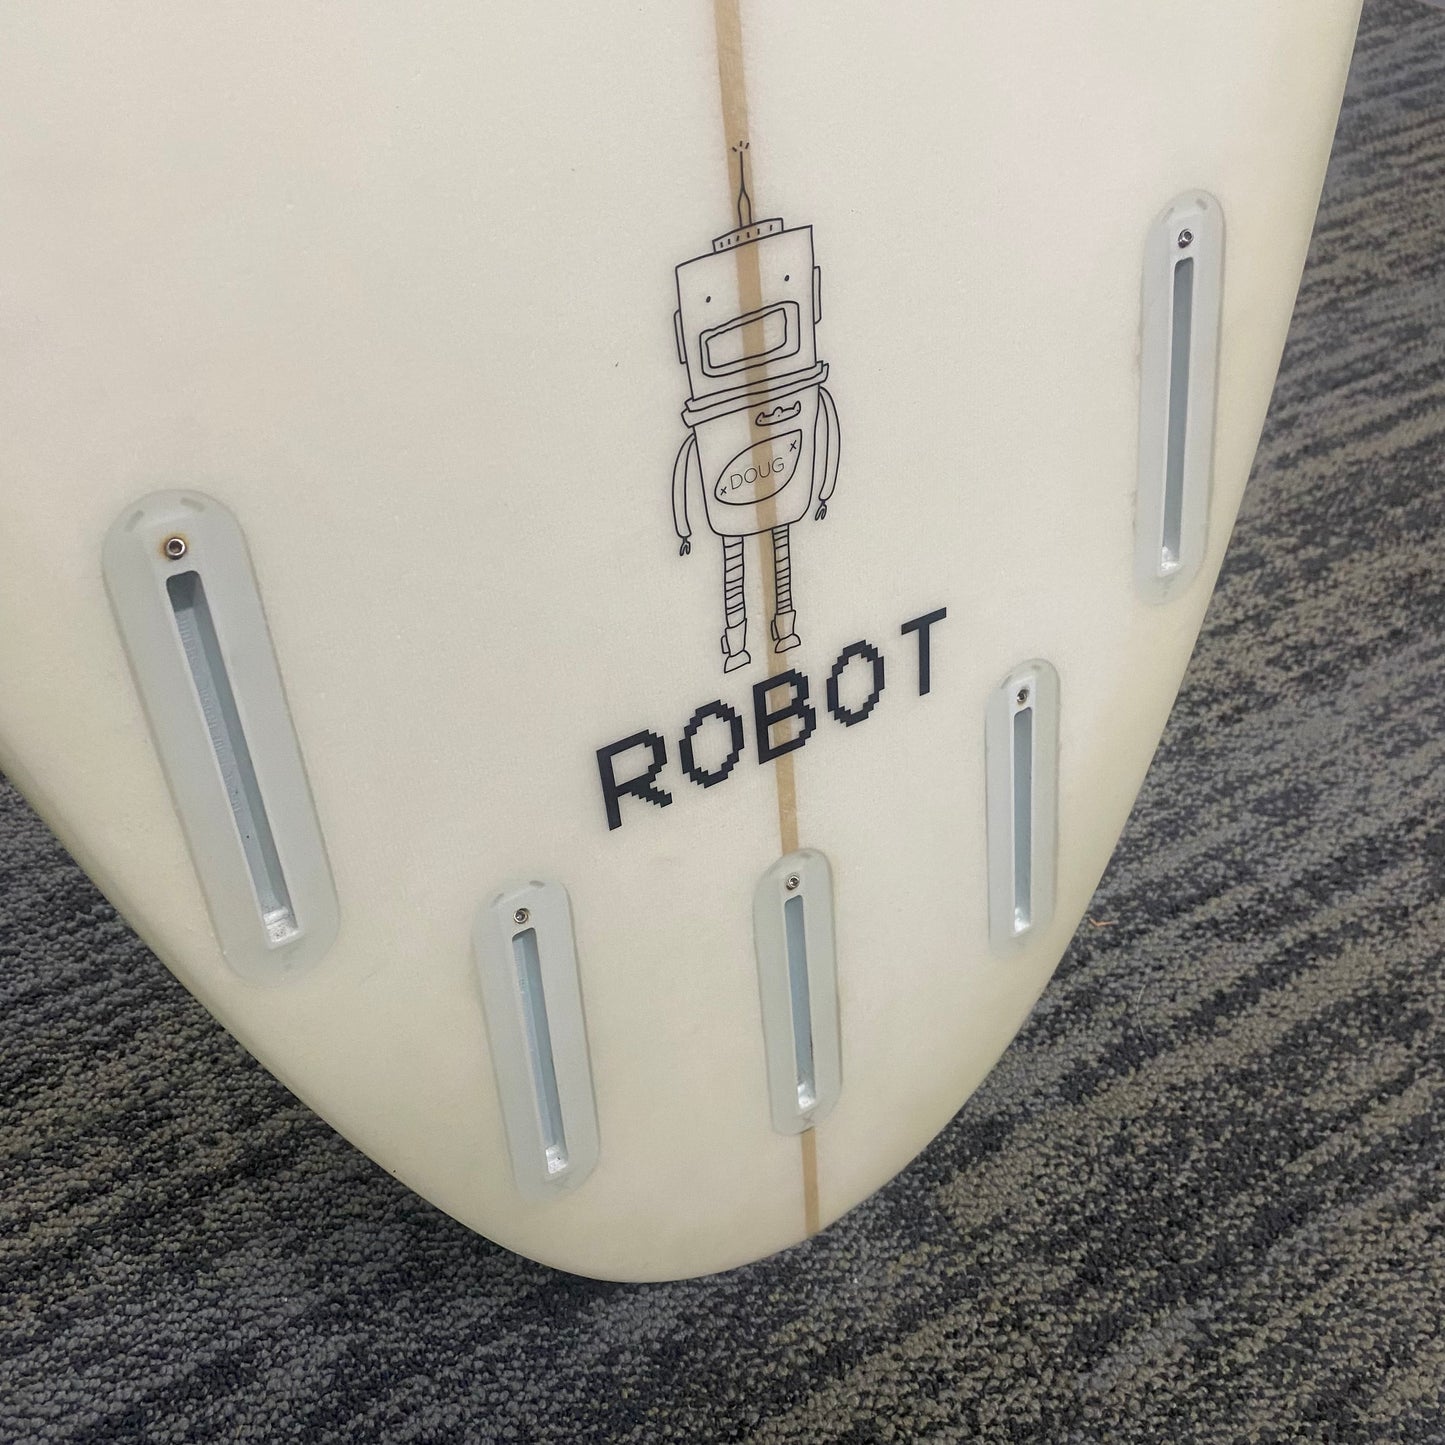 Used 5'11 Robot Shortboard